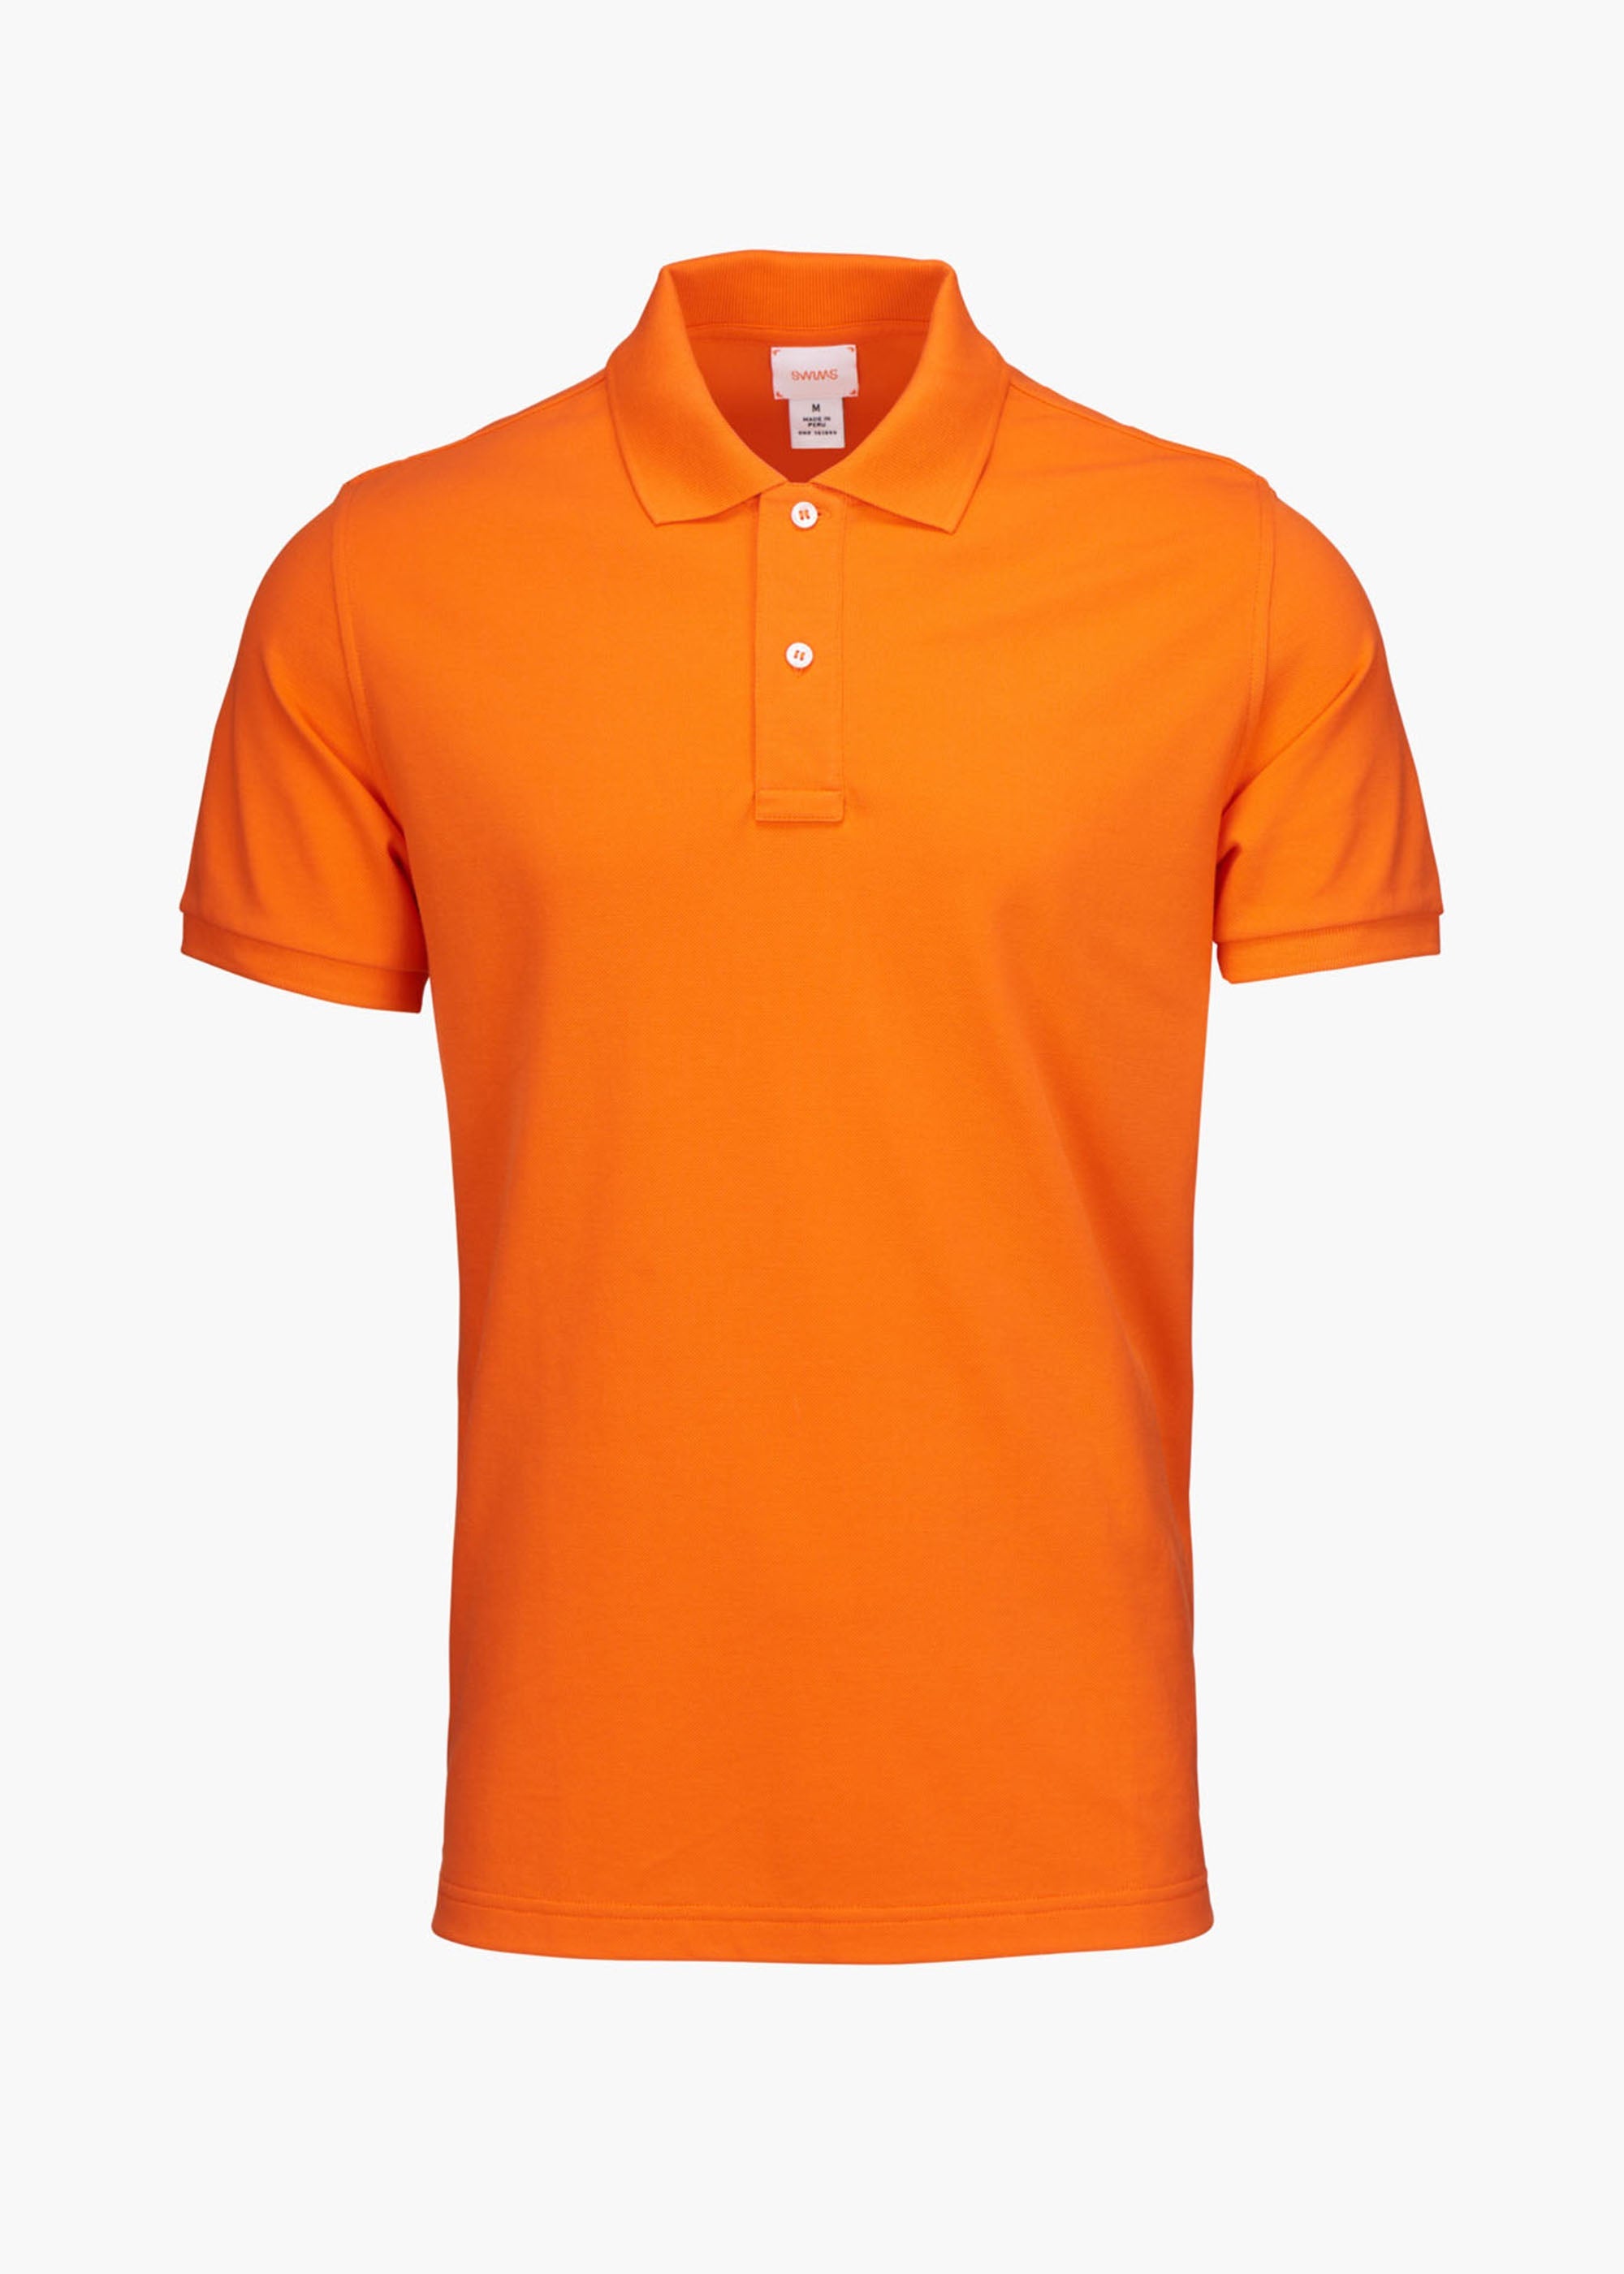 Sunnmore Polo - background::white,variant::SWIMS Orange